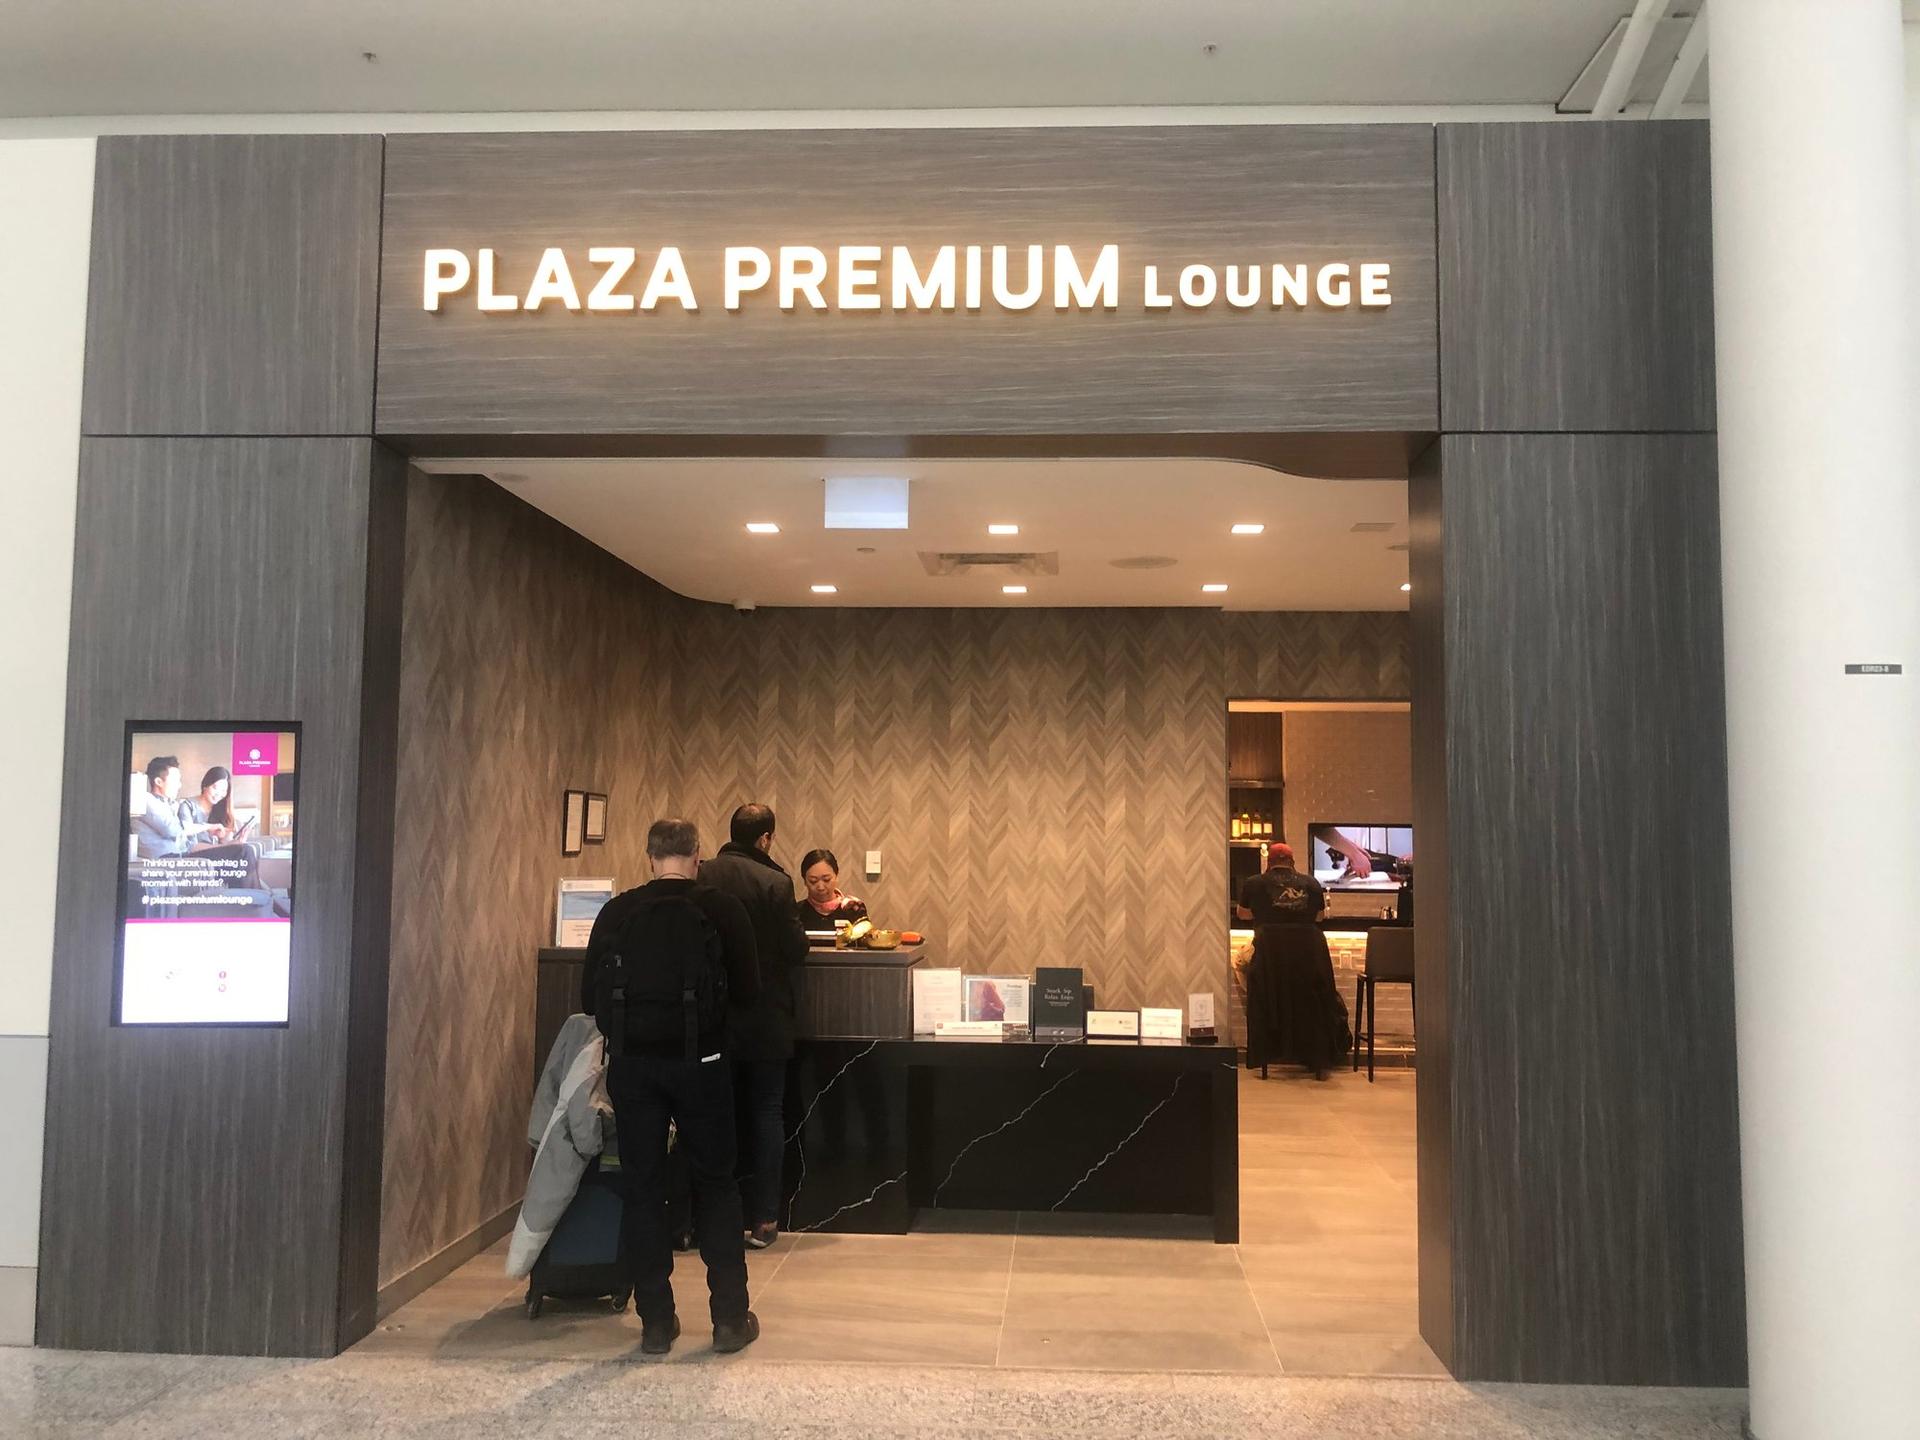 Plaza Premium Lounge image 7 of 31